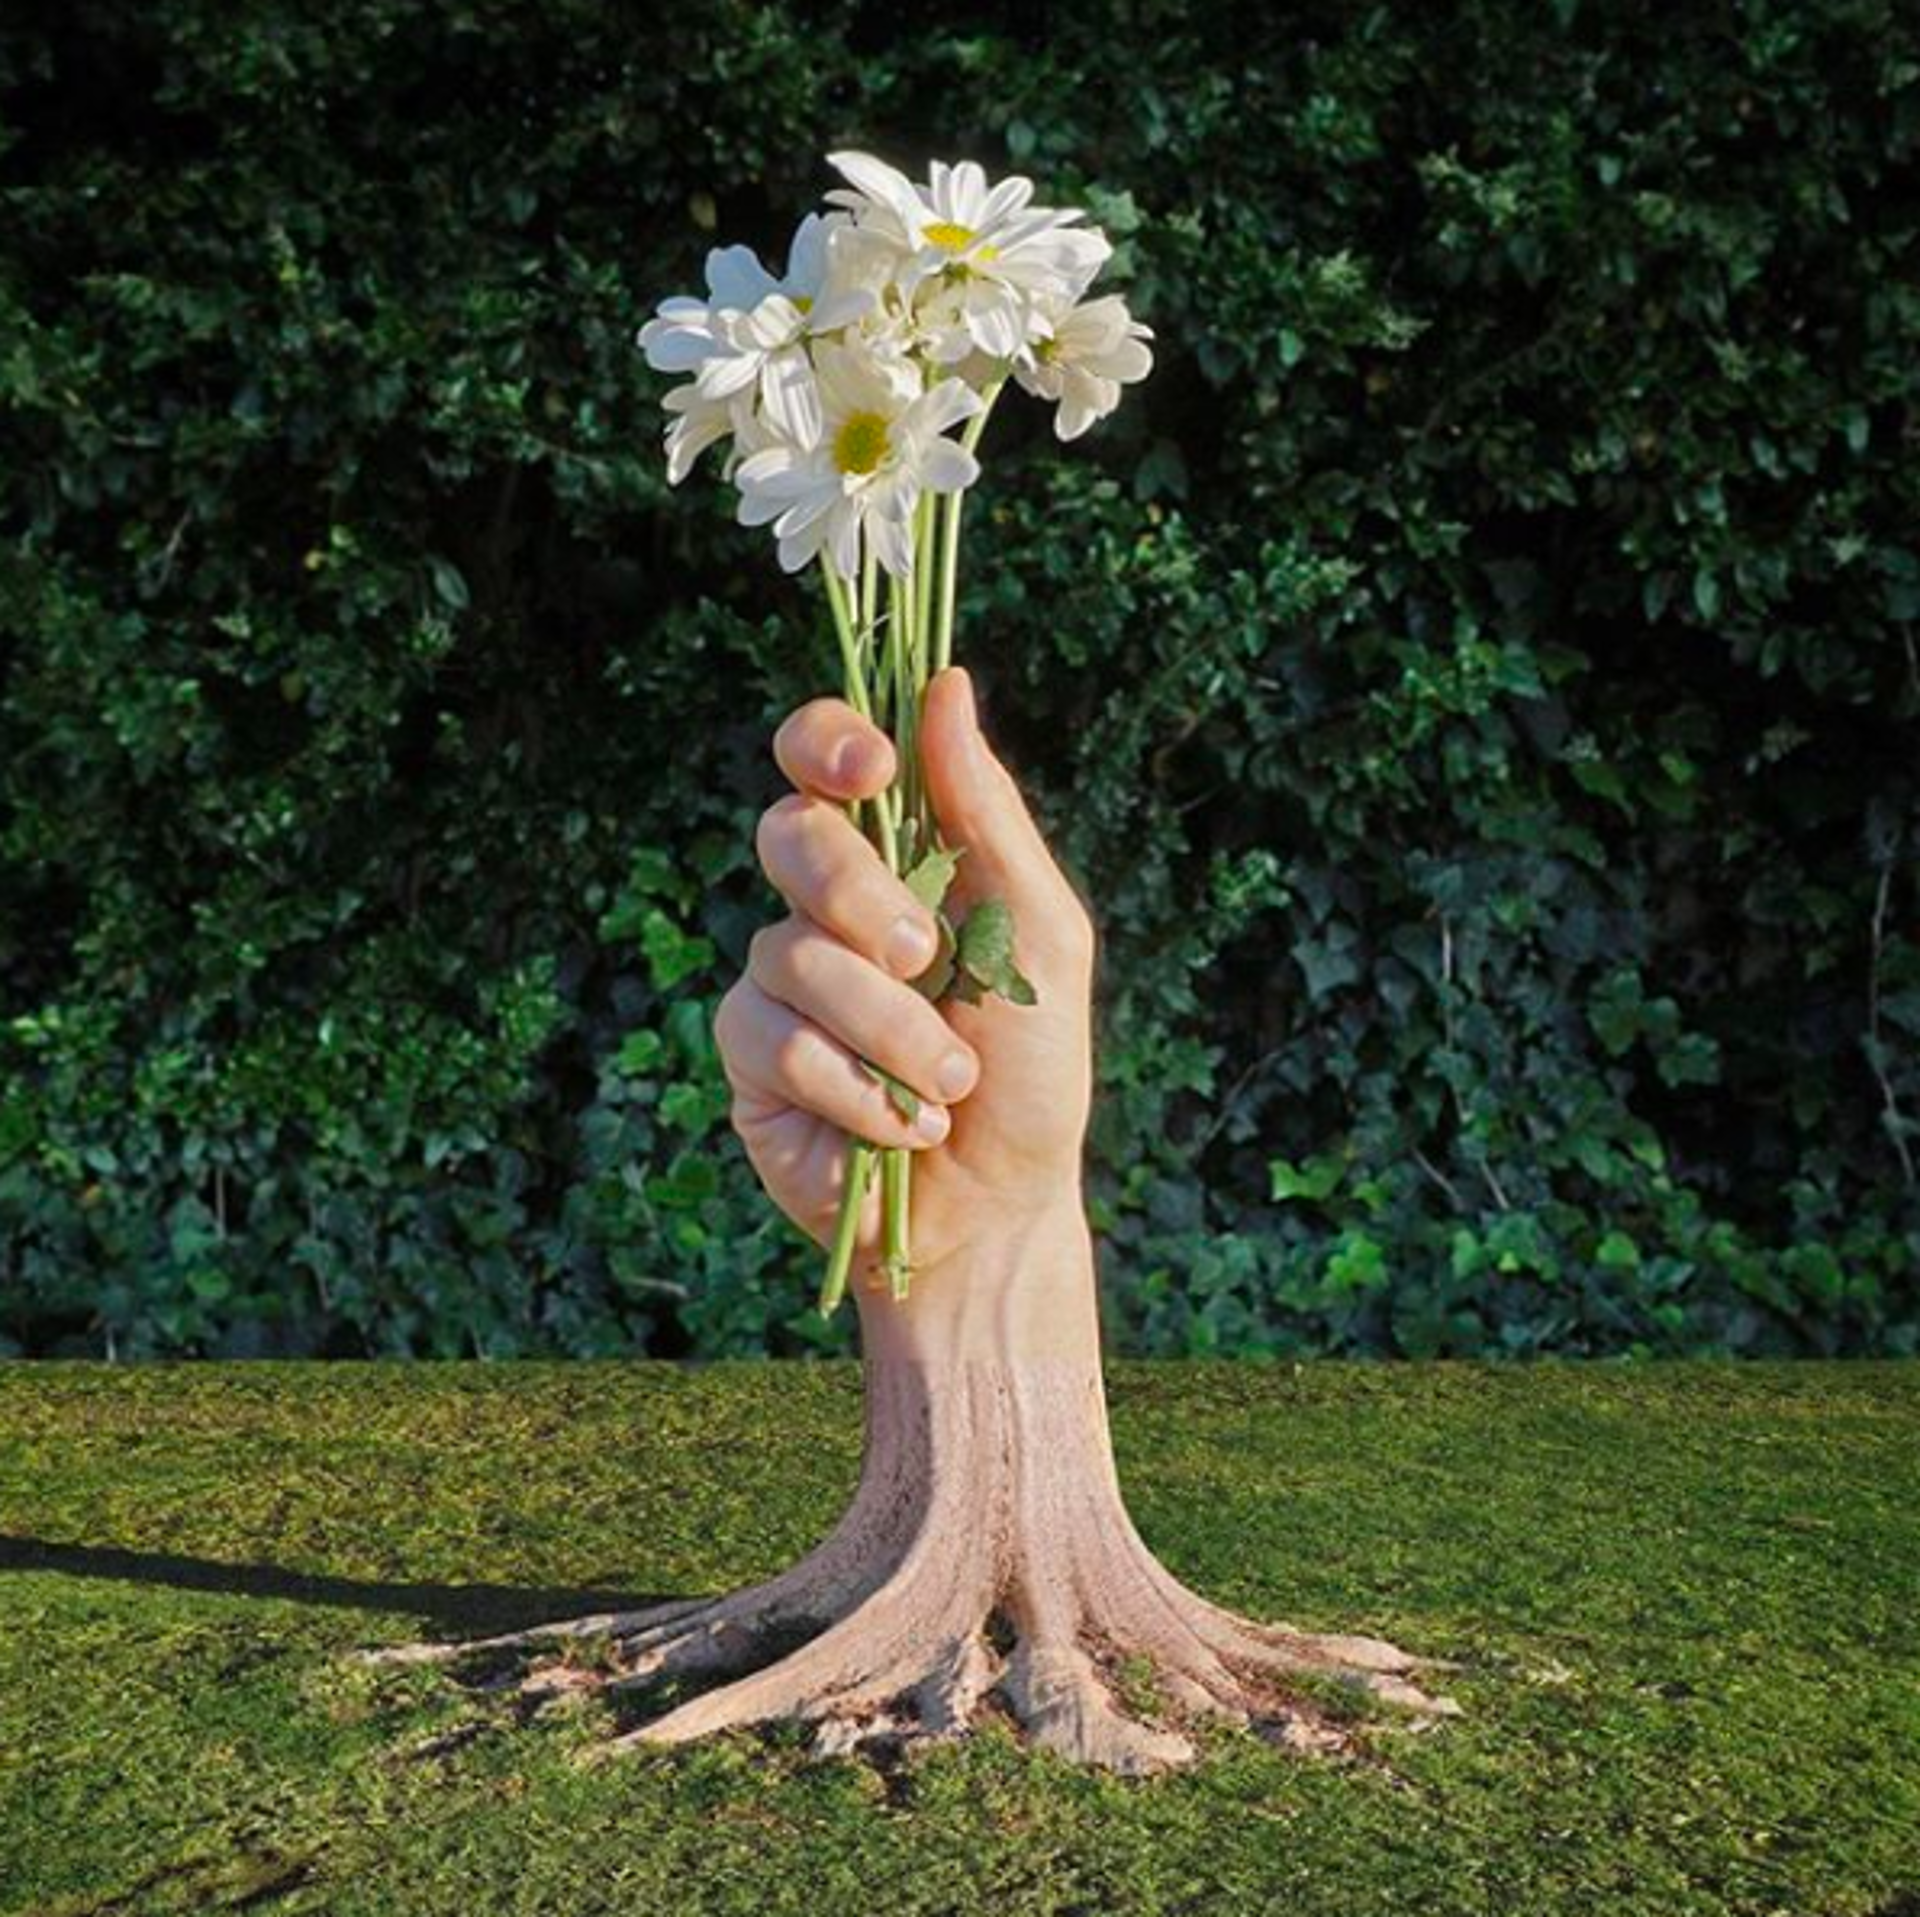 Flowers + Hand + Tree by Stephen McMennamy